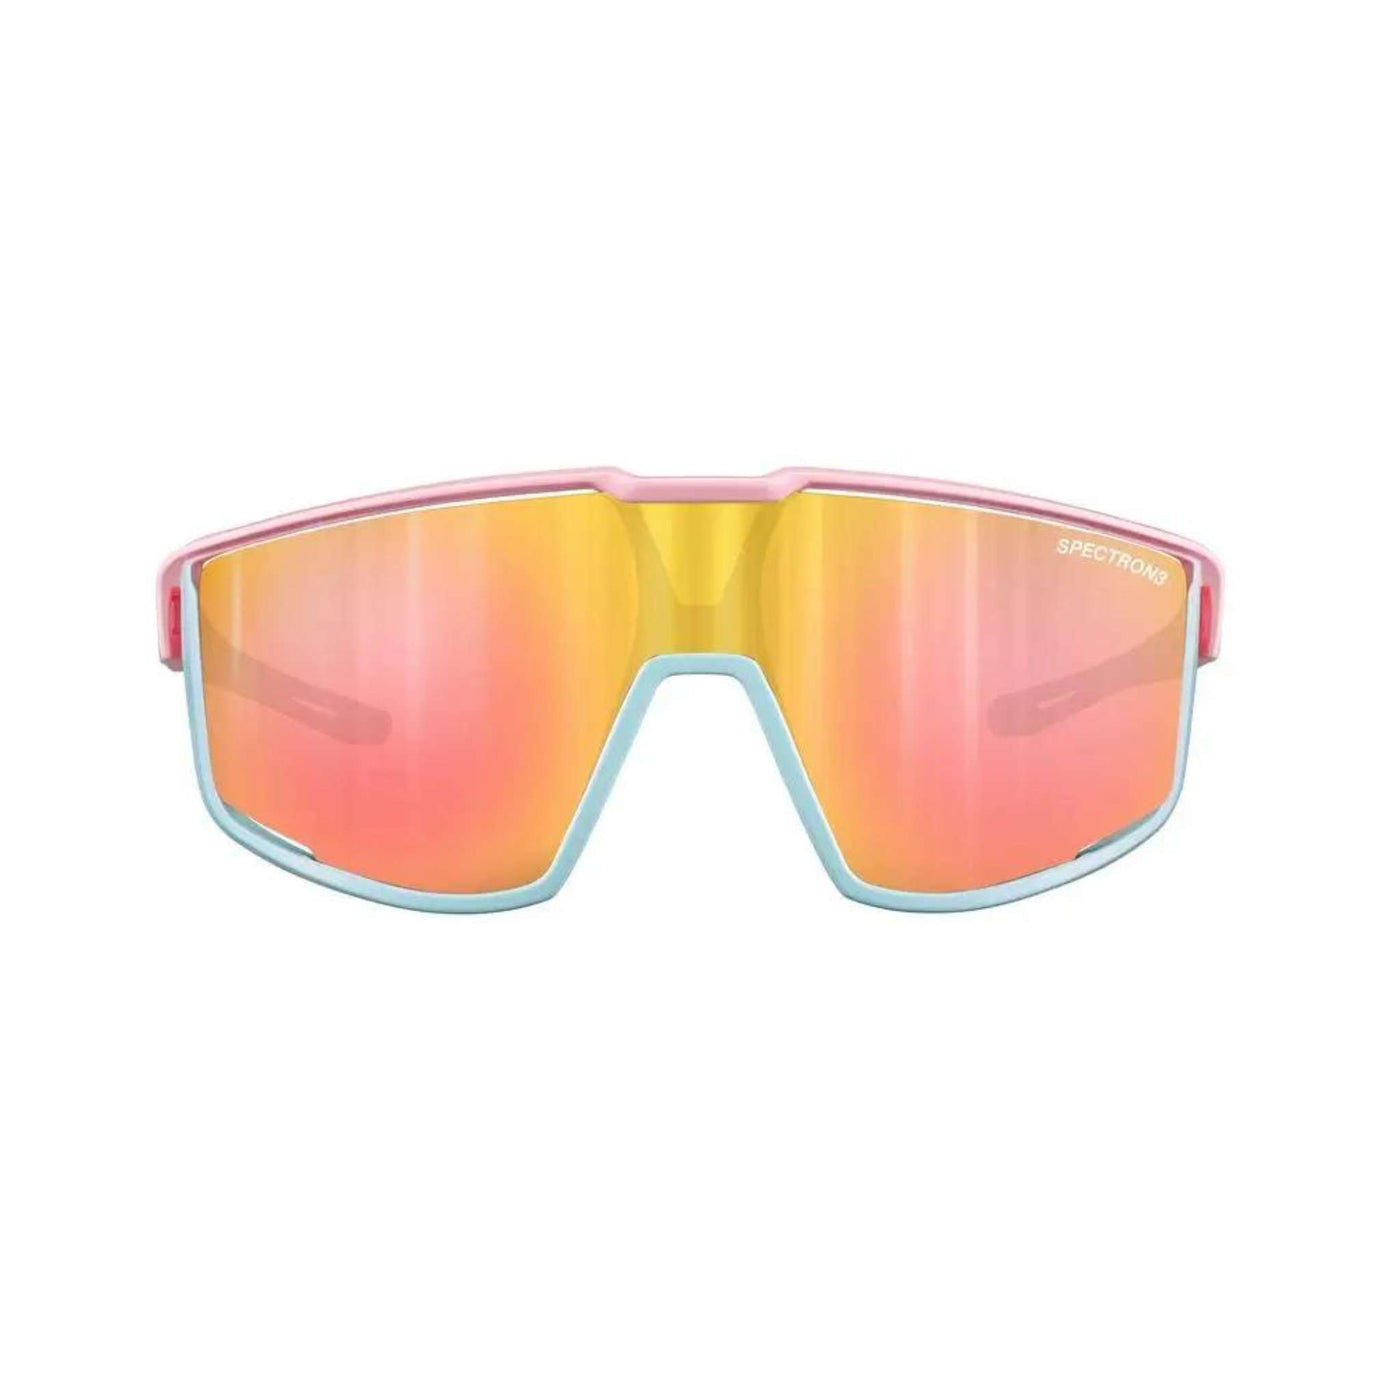 Julbo Fury Pink/Purple Sunglasses - Spectron 3CF Lens | Performance Sunglasses NZ | Further Faster Christchurch NZ